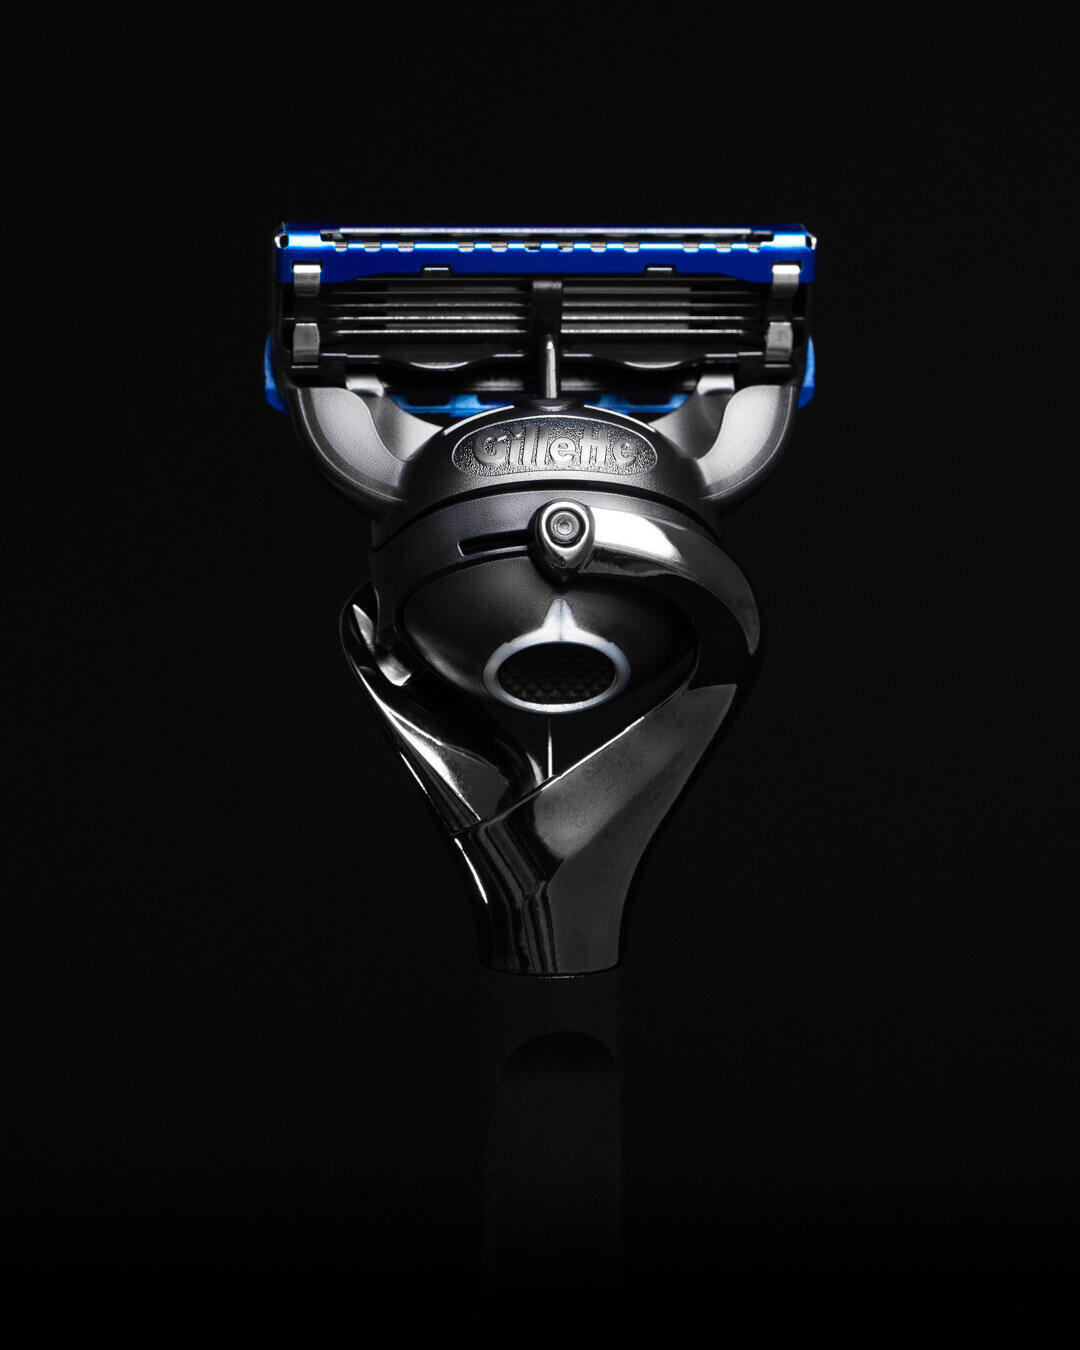 Gillette Fusion 5 limited edition razor head shaving flexi disk technology.jpg